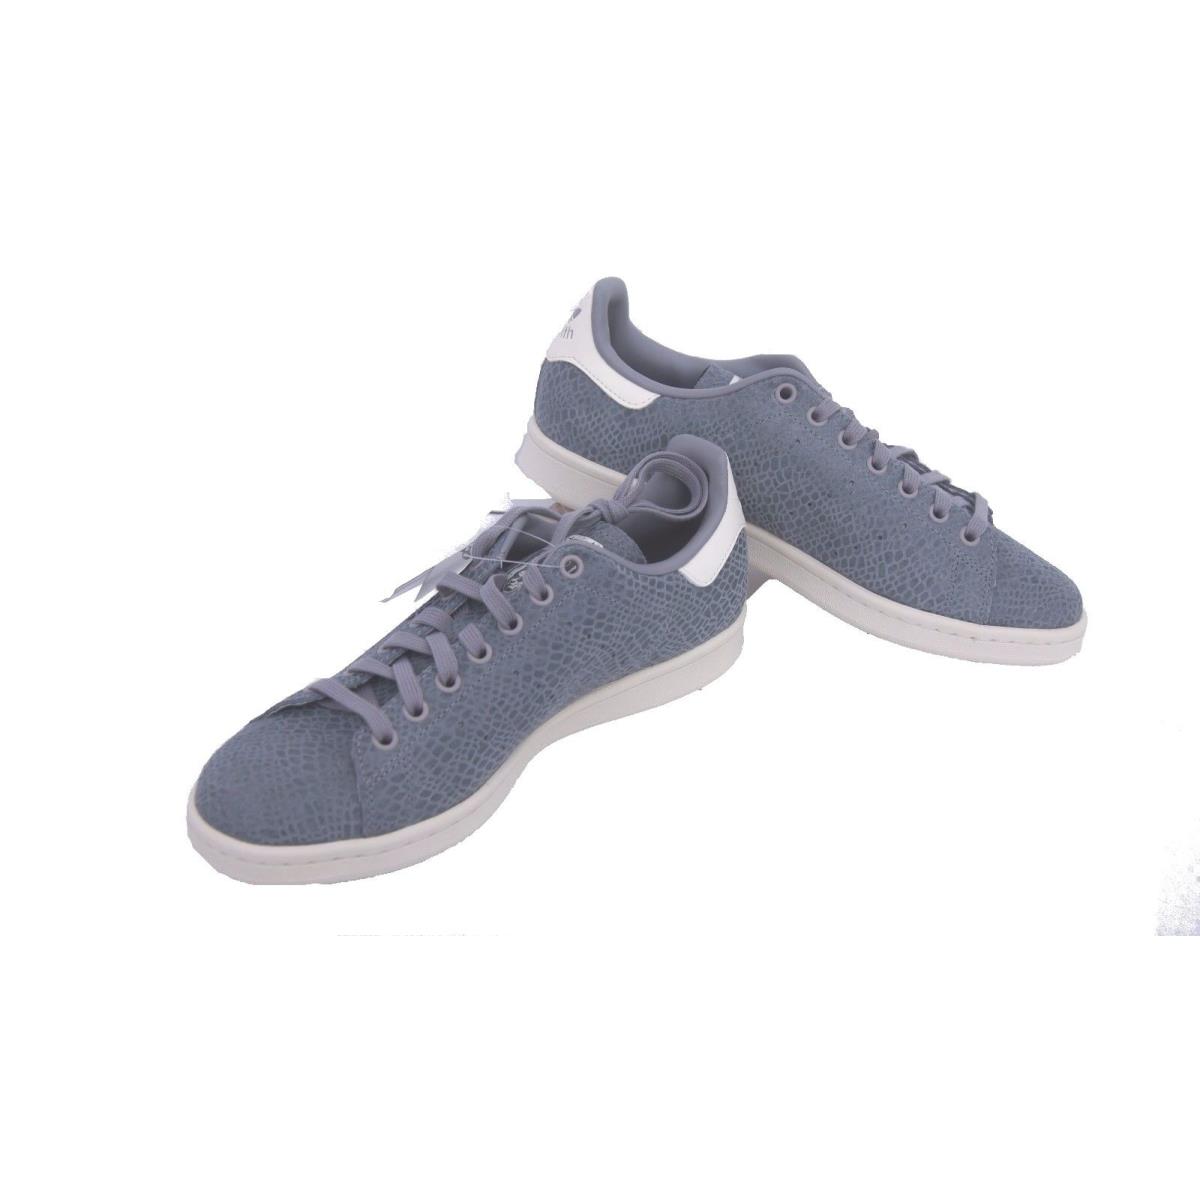 Adidas Stan Smith Shoes Ltonix Light Onix Originals Size 9 9.5 10